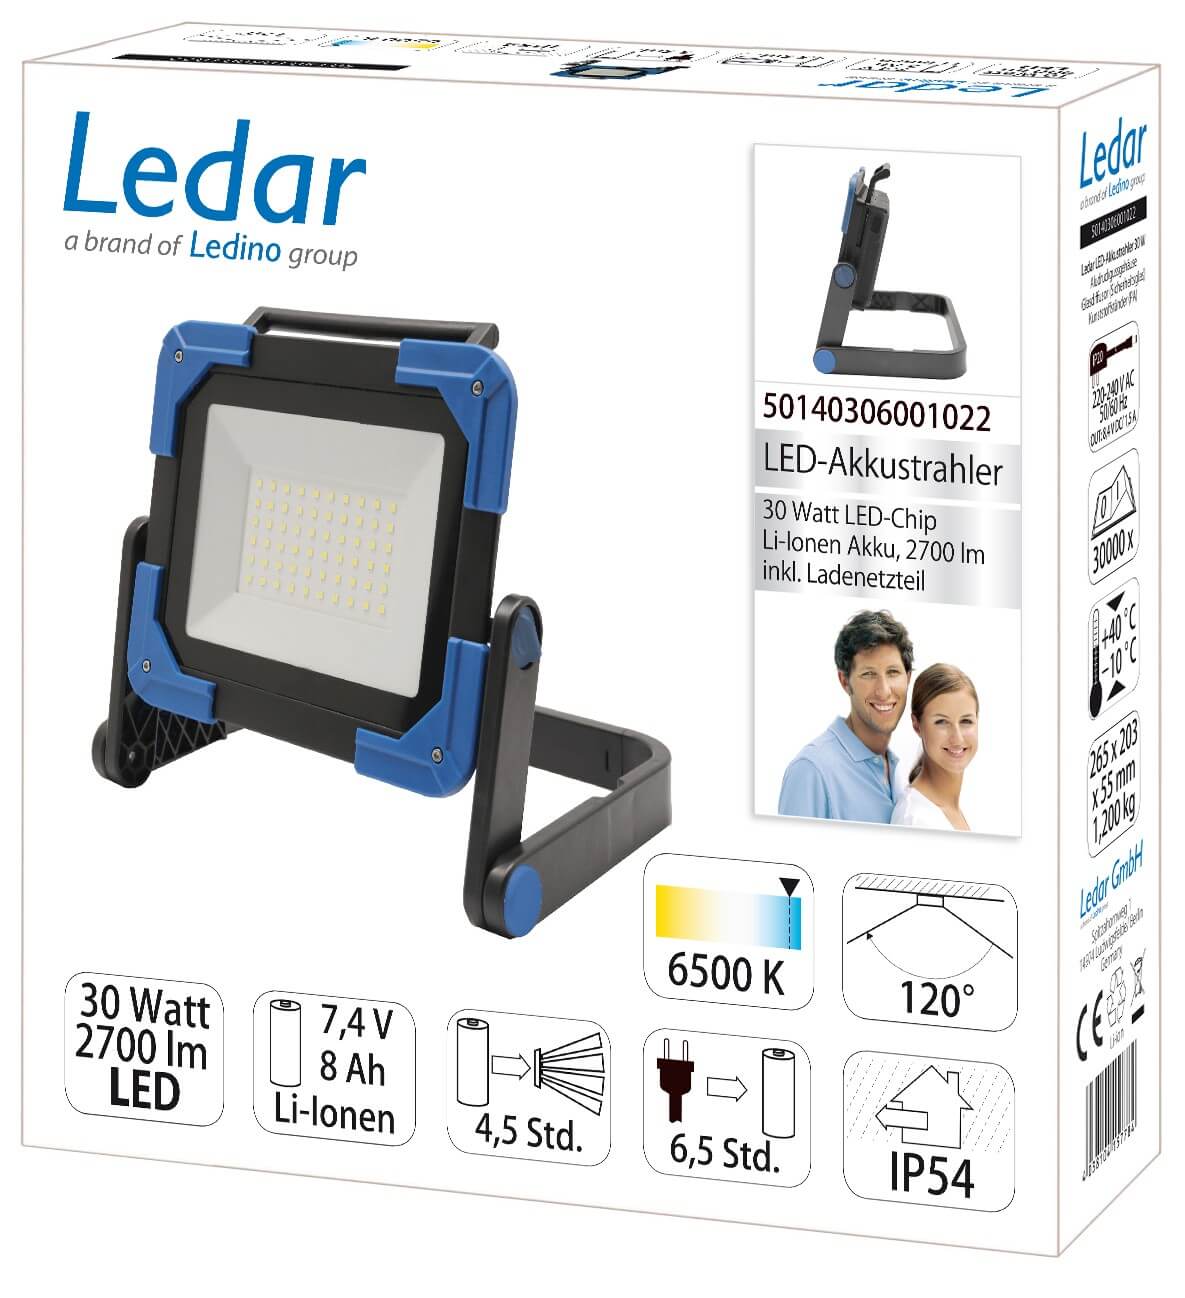 Ledar LED-Akkustrahler 30W mobile Beleuchtung 3000lm, Li-Ionen-Akku  7,4V/8Ah für Bau, Renovierung, | Tageslichtlampen